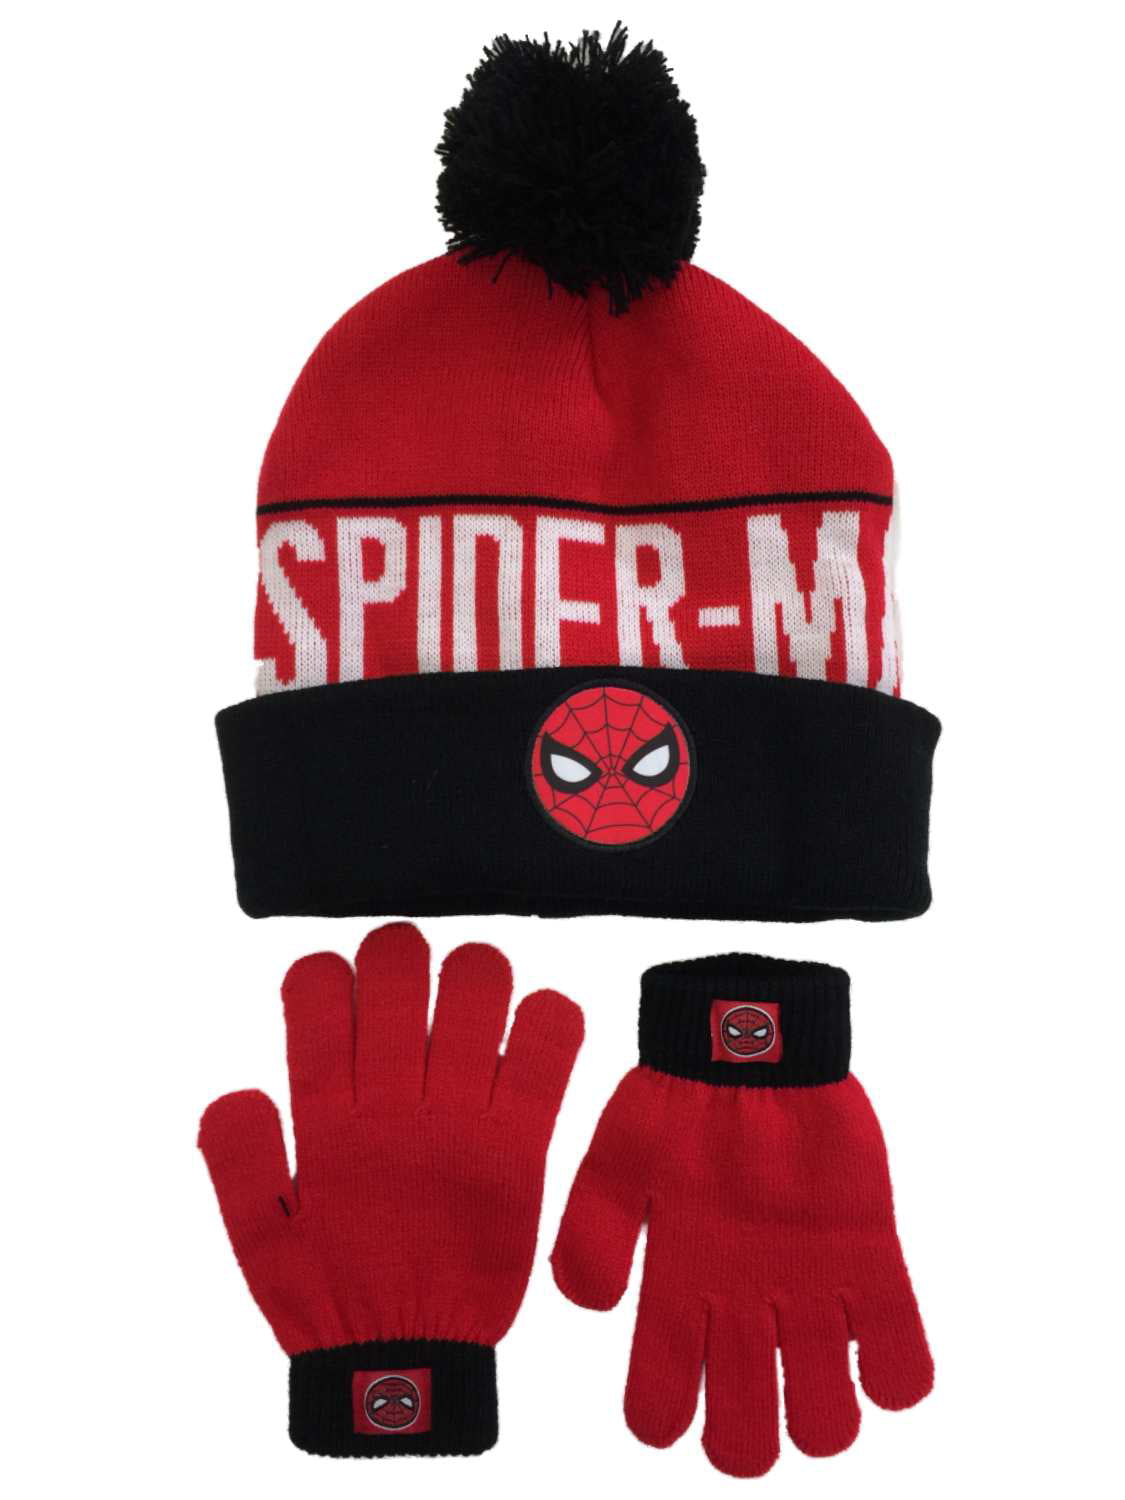 SPIDER-MAN MARVEL COMICS Knit Winter Beanie Hat & Gloves Set w/ Pom-Pom NWT  $24 